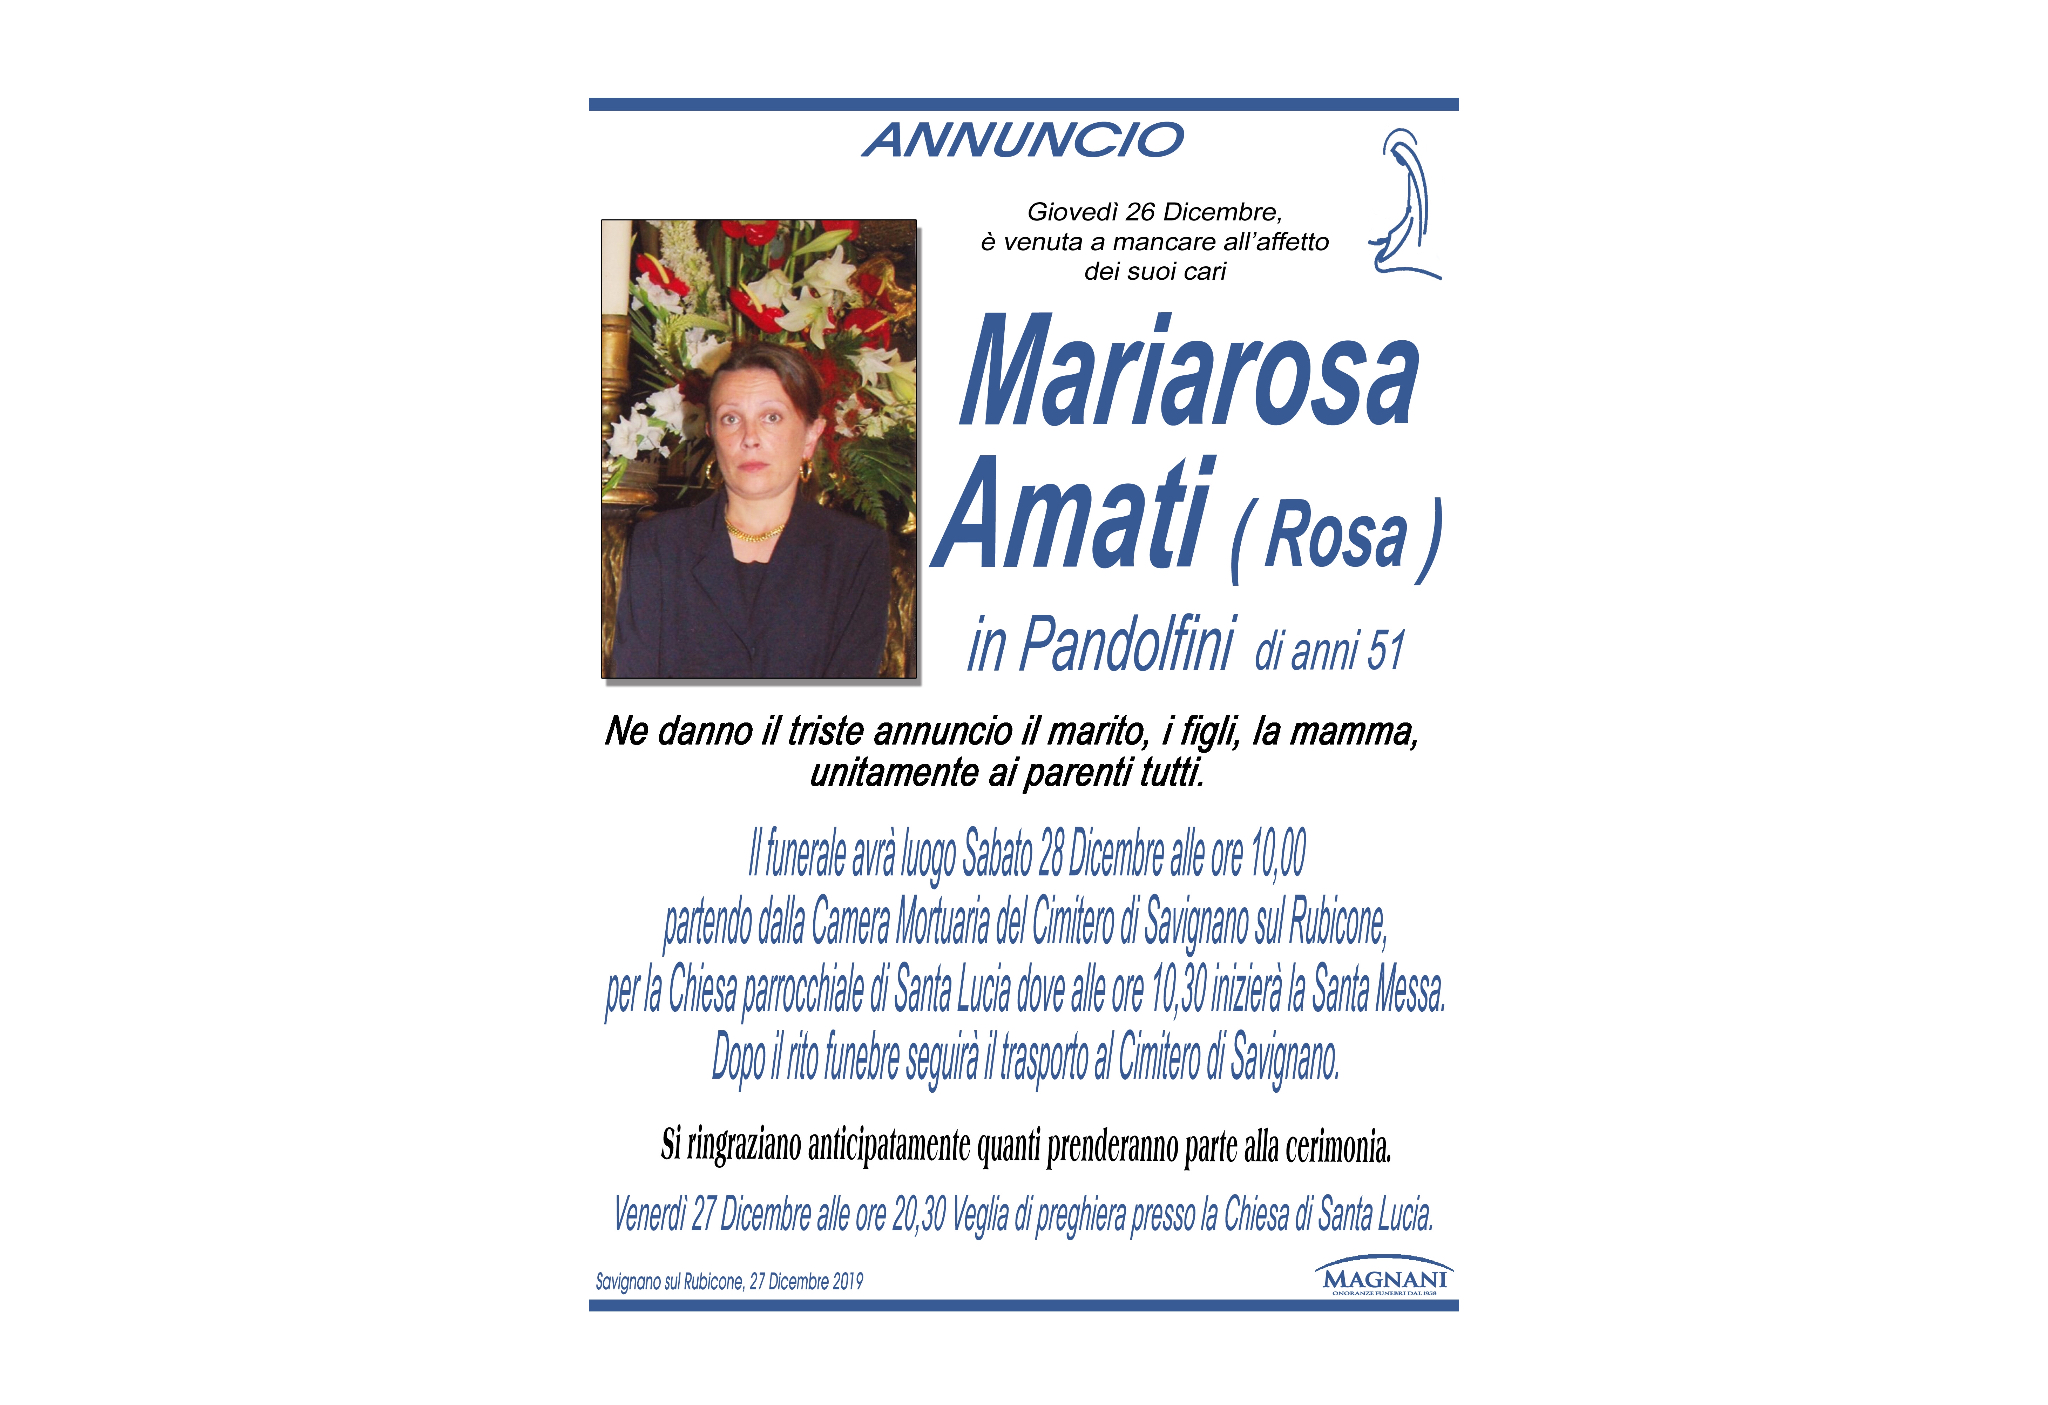 Mariarosa Amati